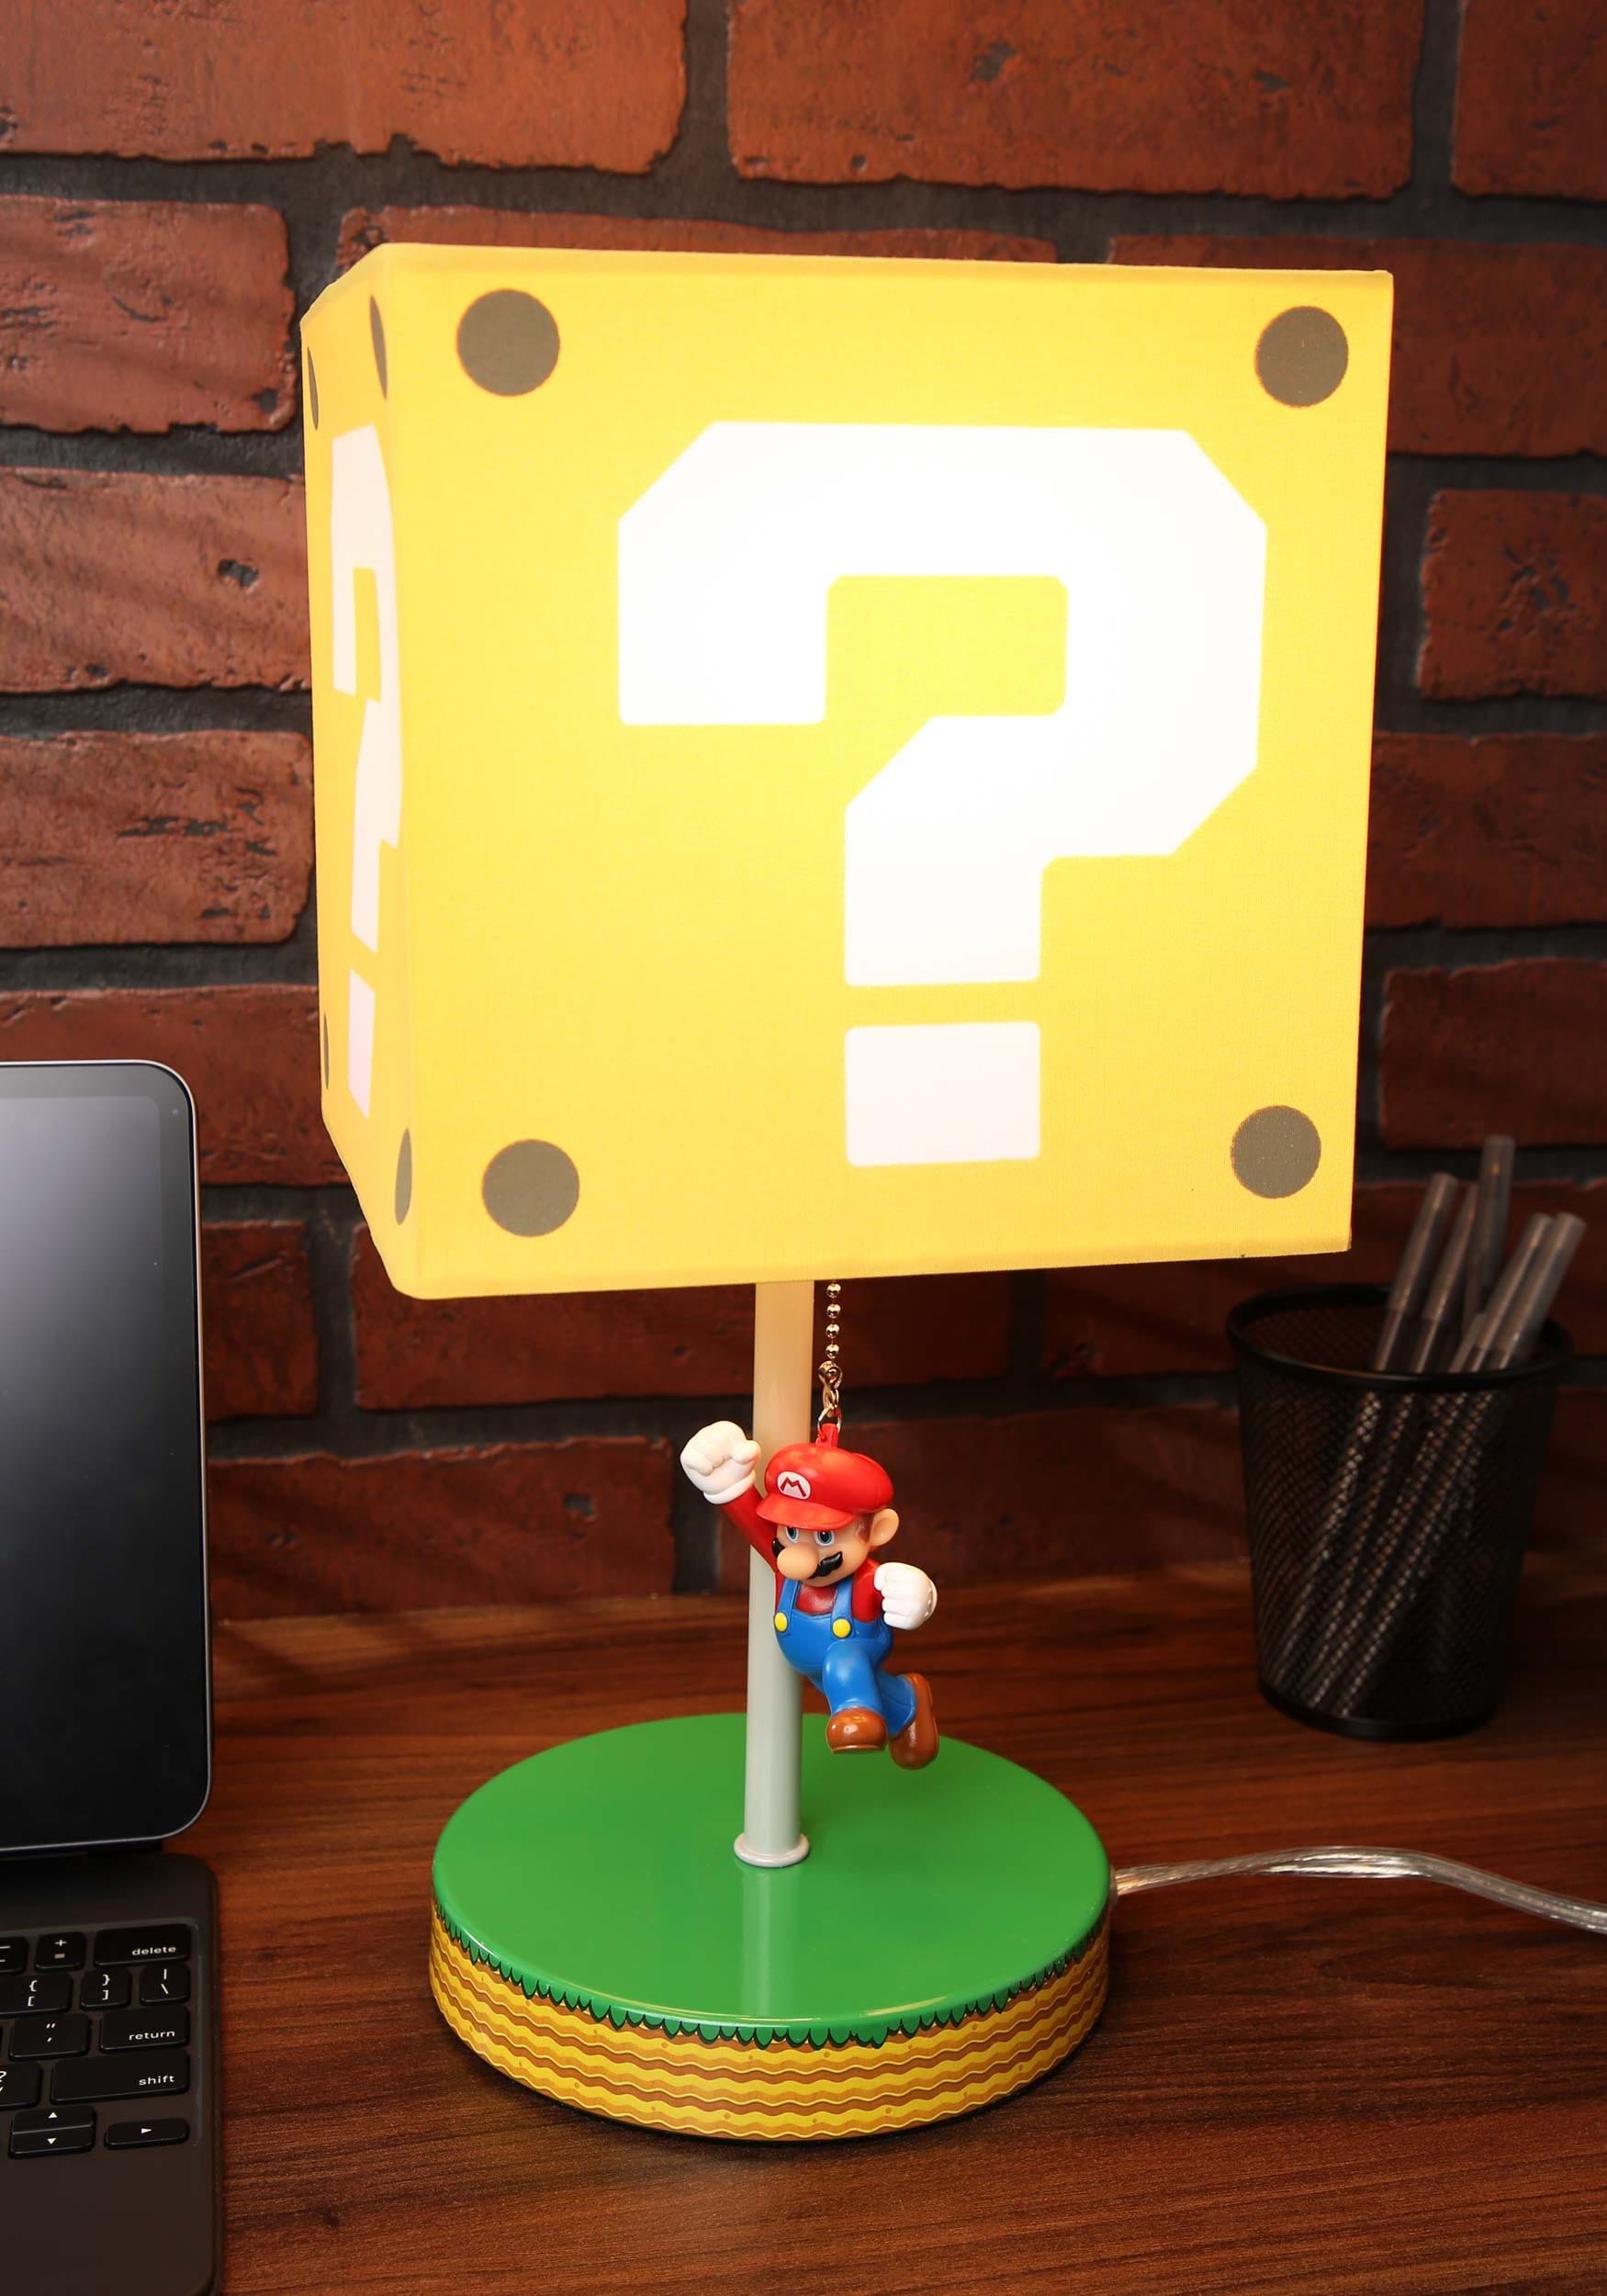 Super Mario POW Block Icon Light